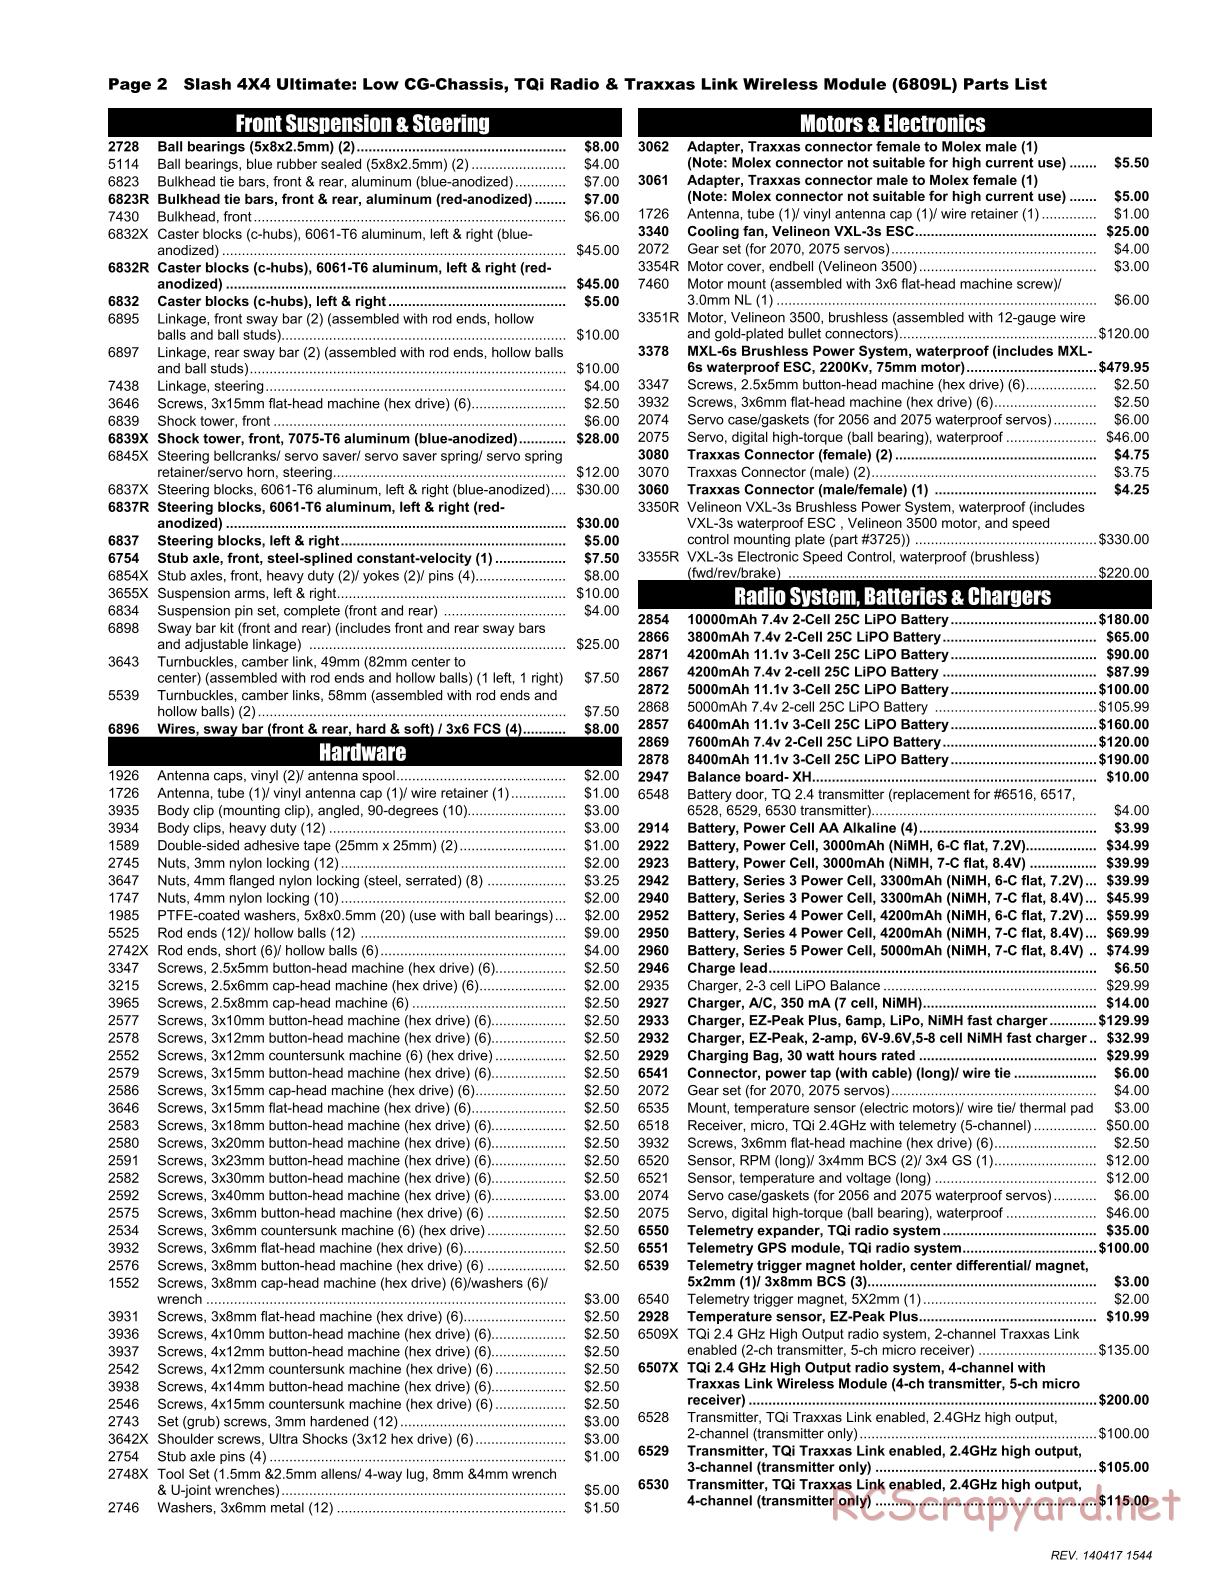 Traxxas - Slash 4x4 Ultimate LiPo (2014) - Parts List - Page 2